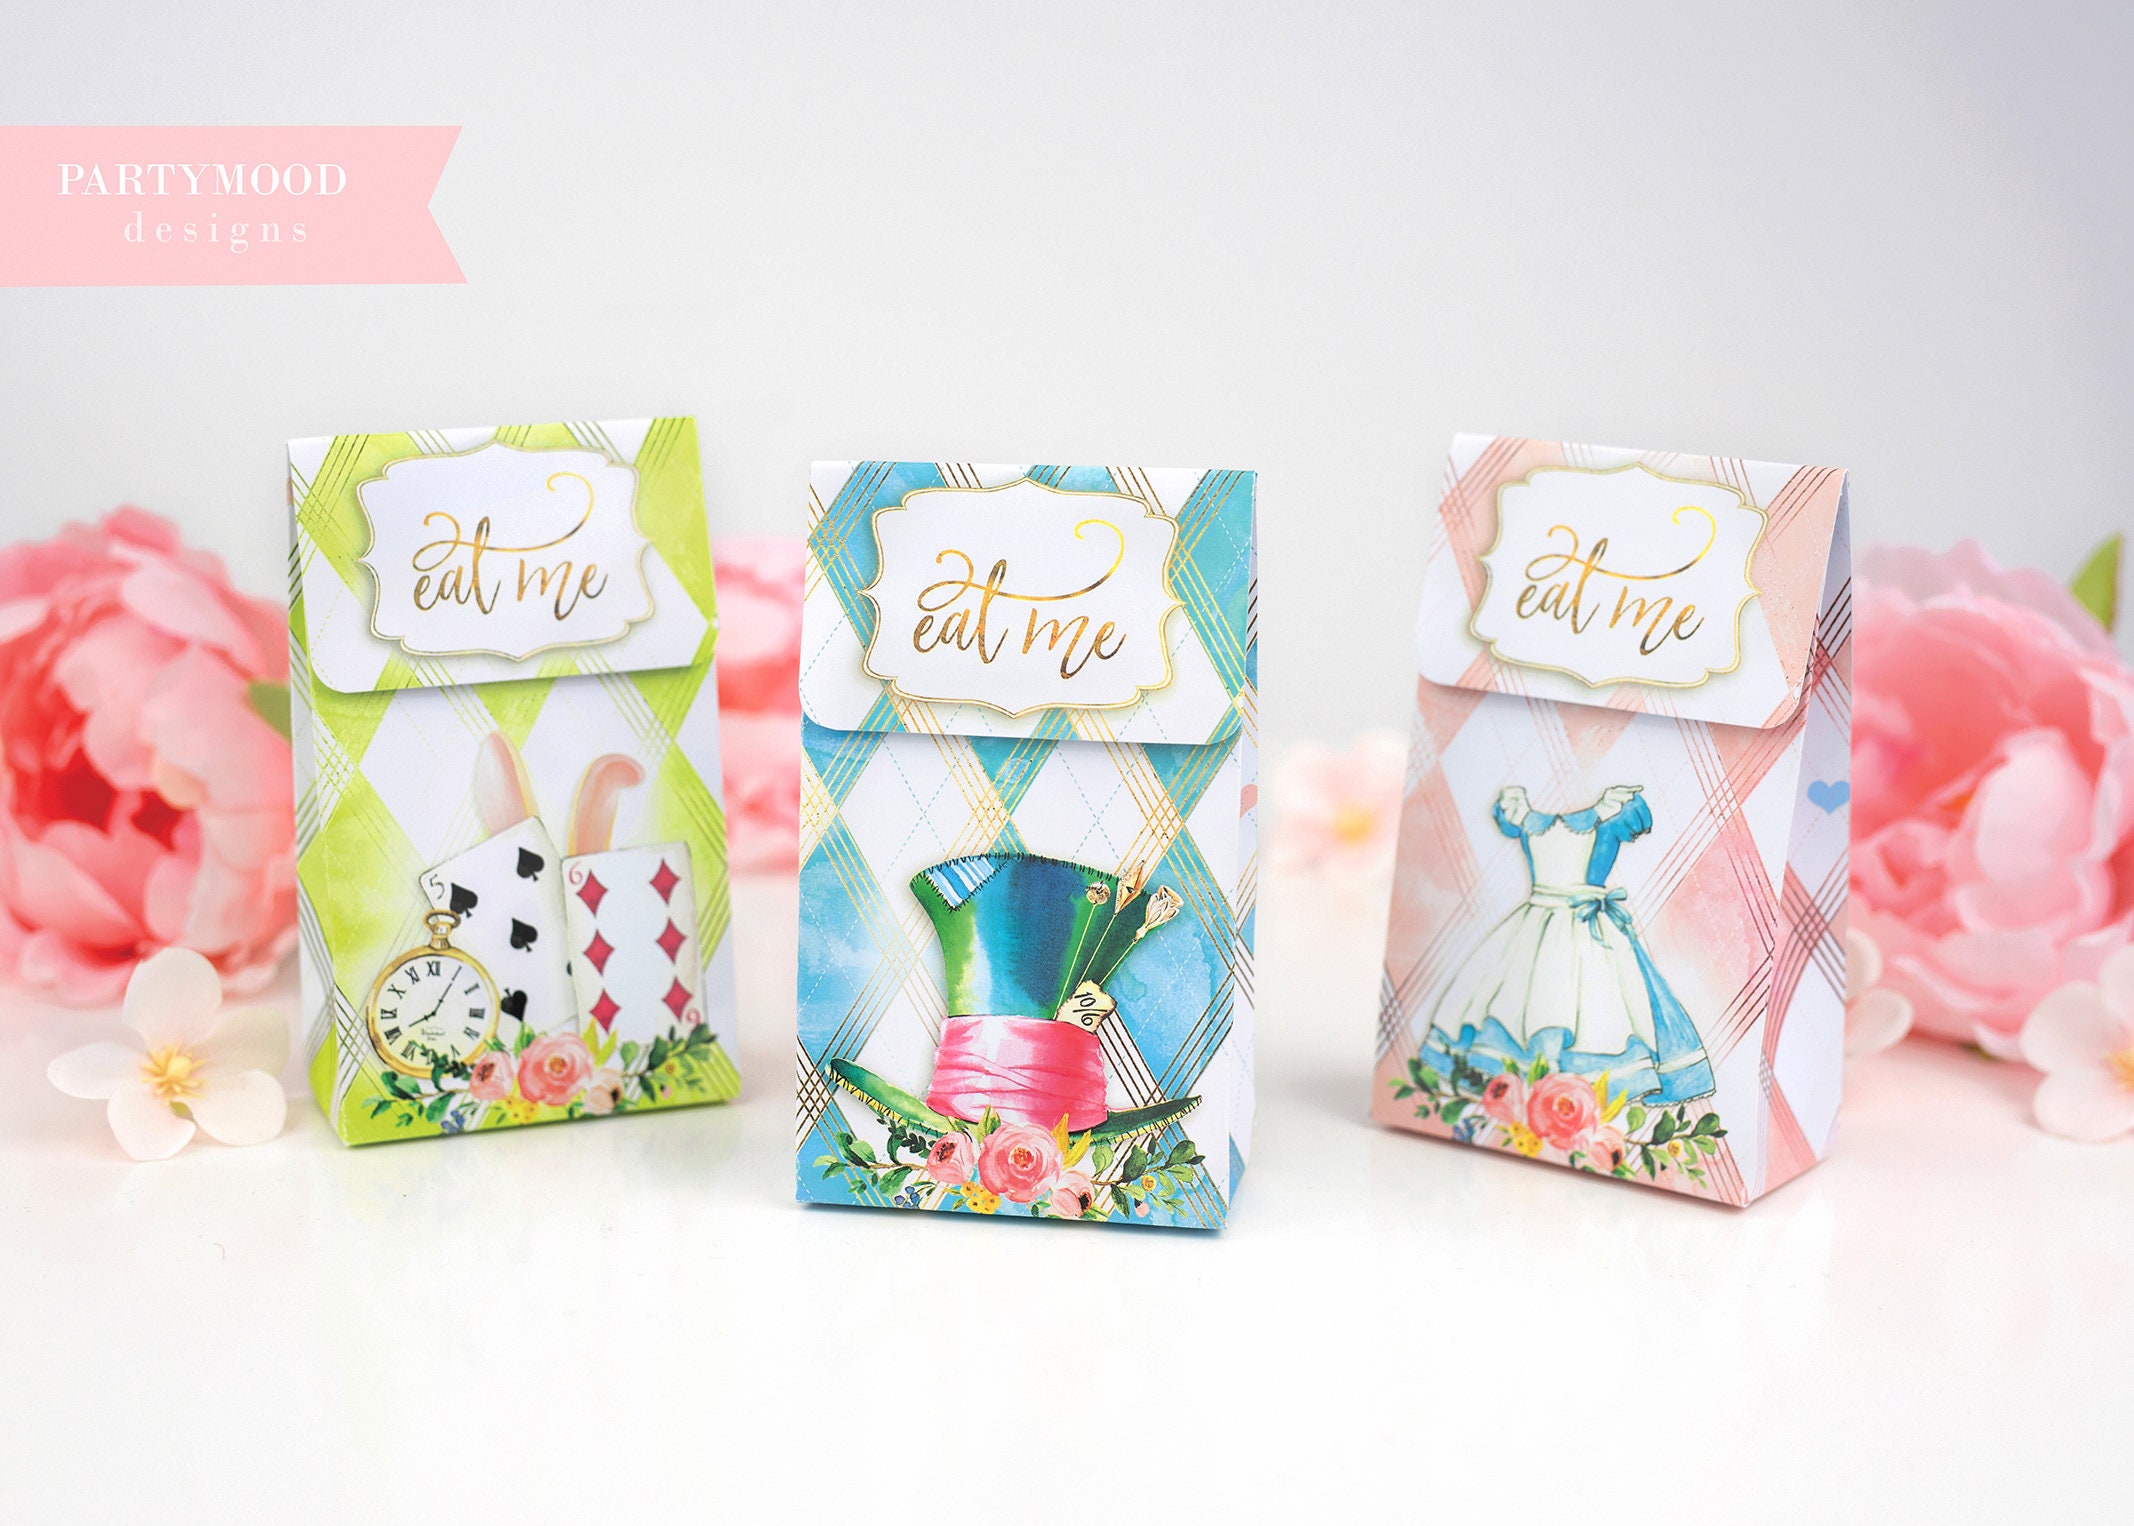 Alice in Wonderland Tea Party Gift Wrap for kids birthdays - Viola